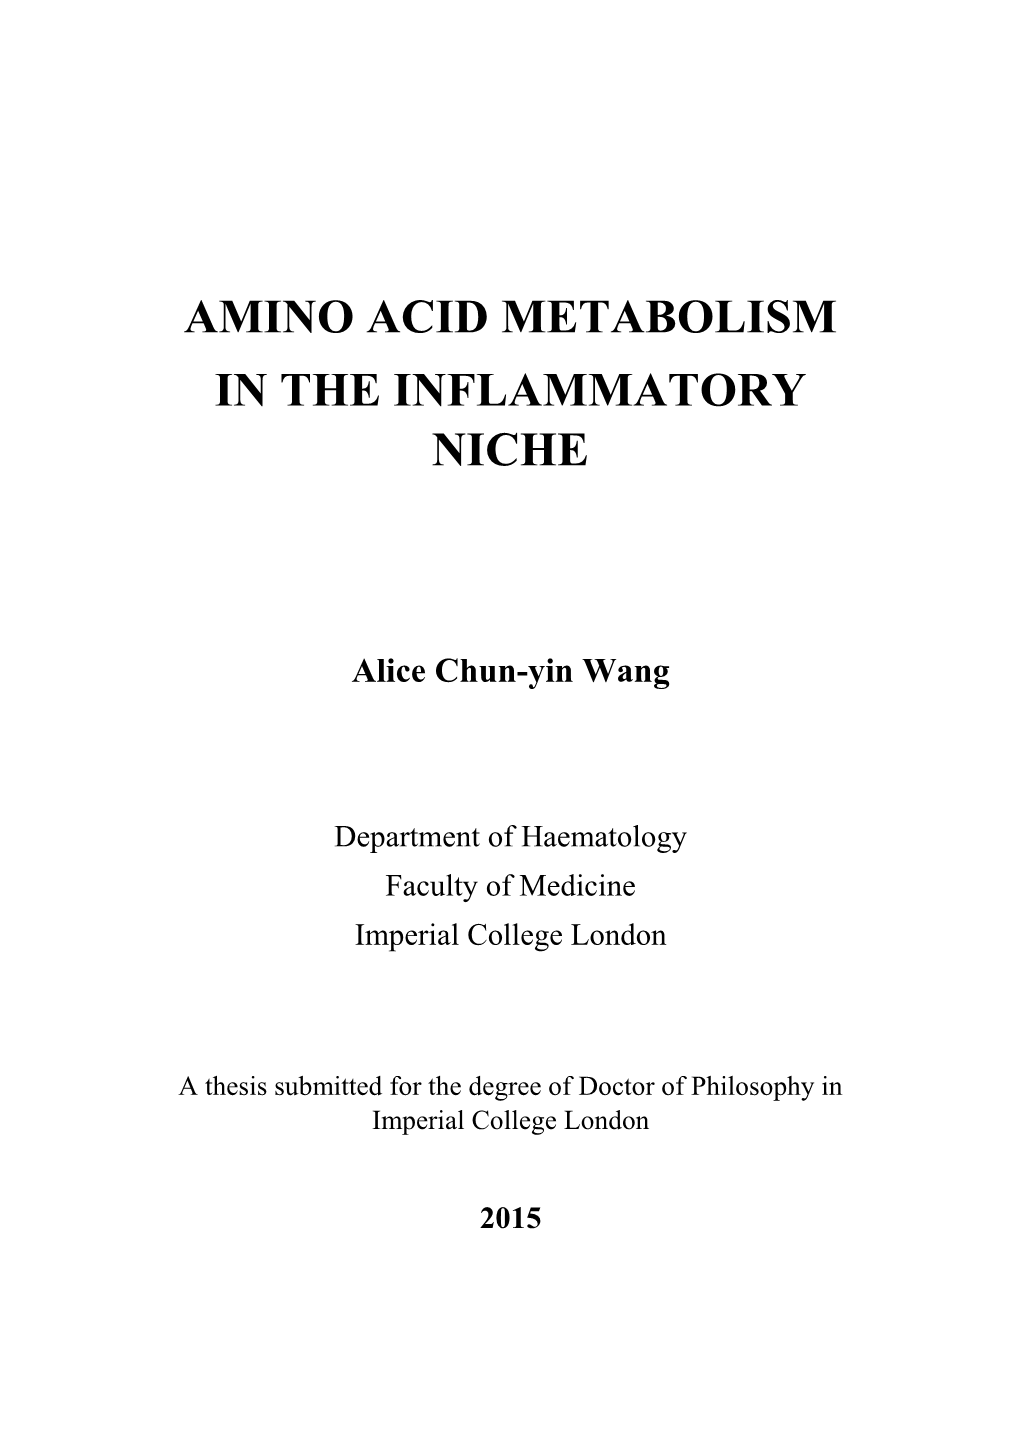 Amino Acid Metabolism in the Inflammatory Niche